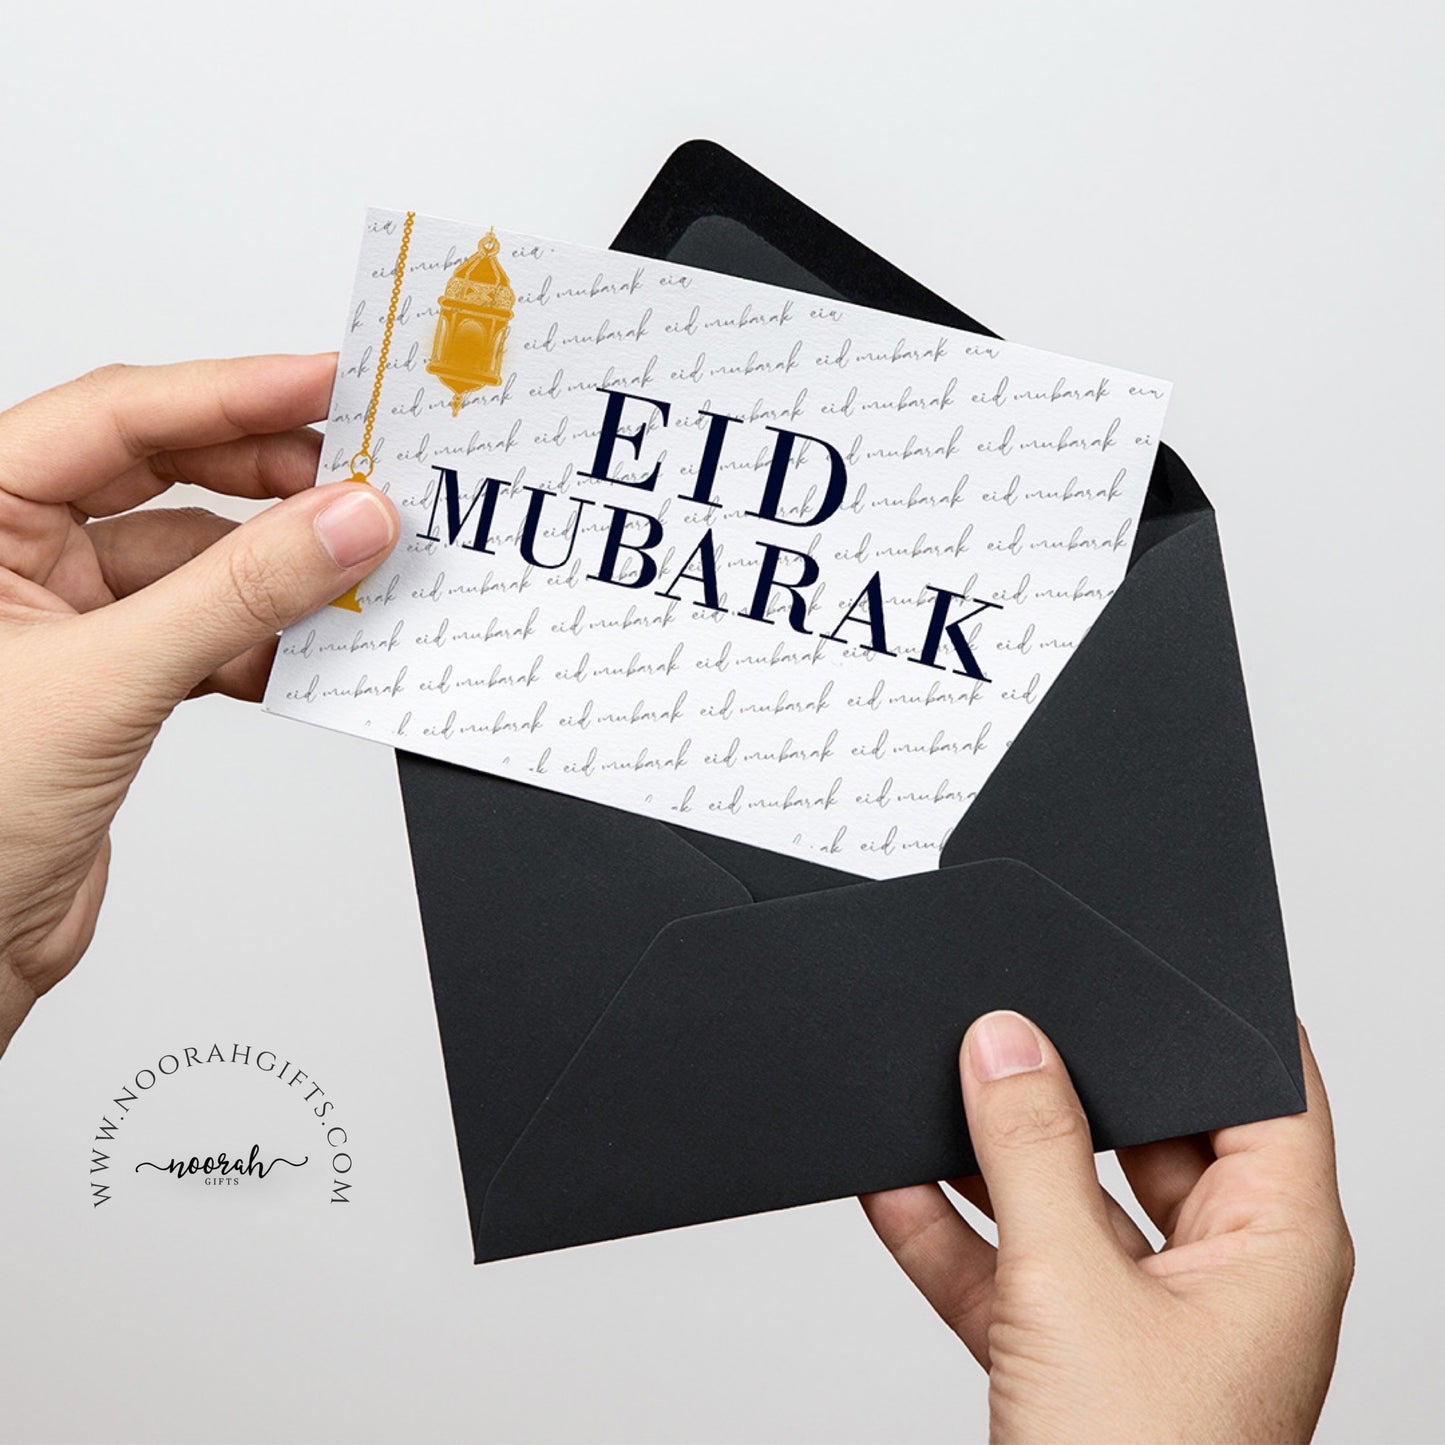 Set of 8 Eid Cards